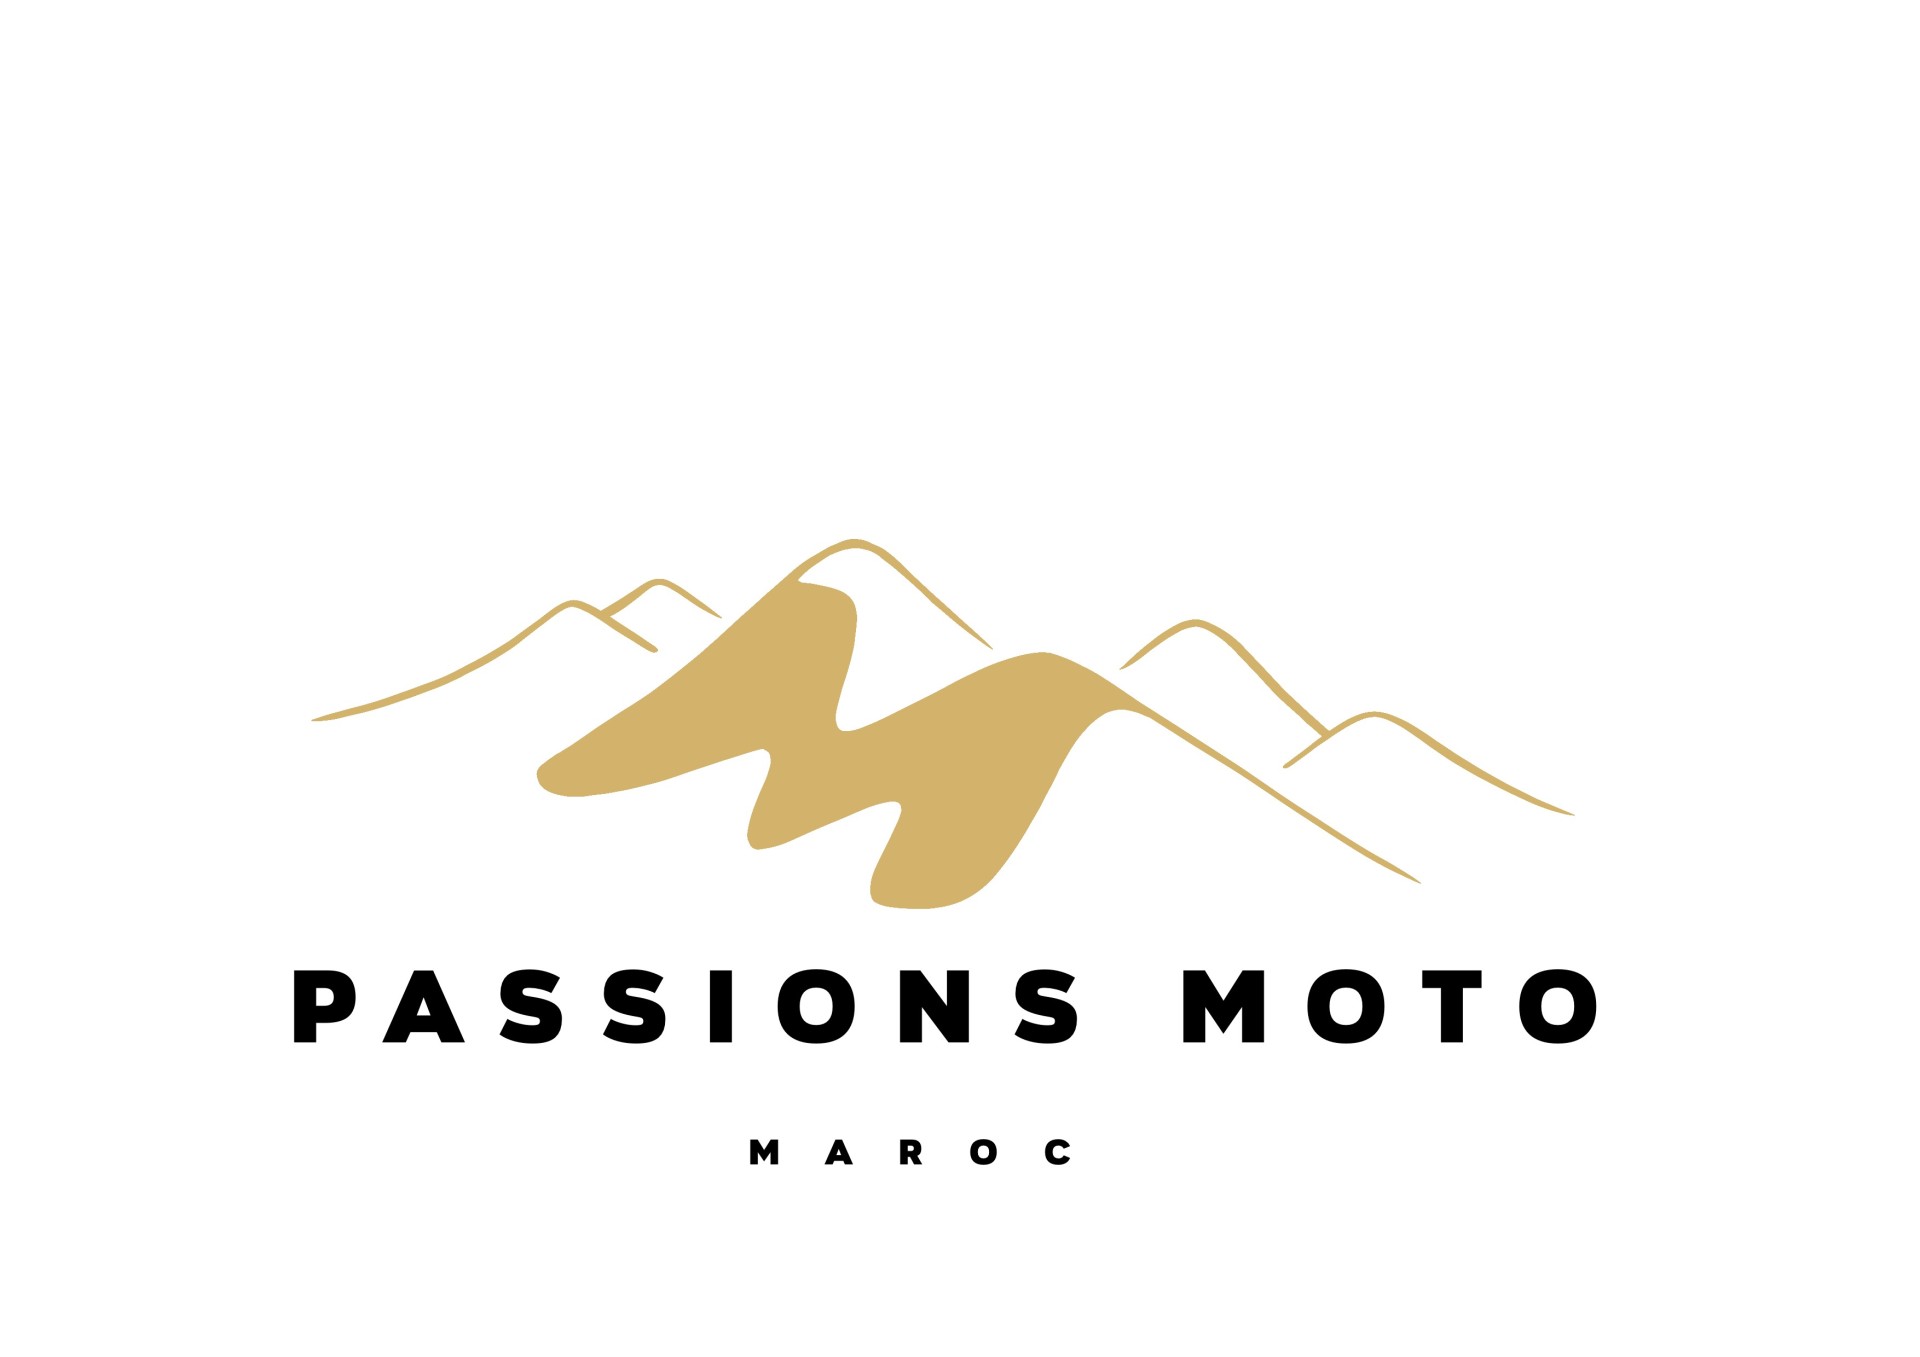 Passions Moto Maroc Sarl logo